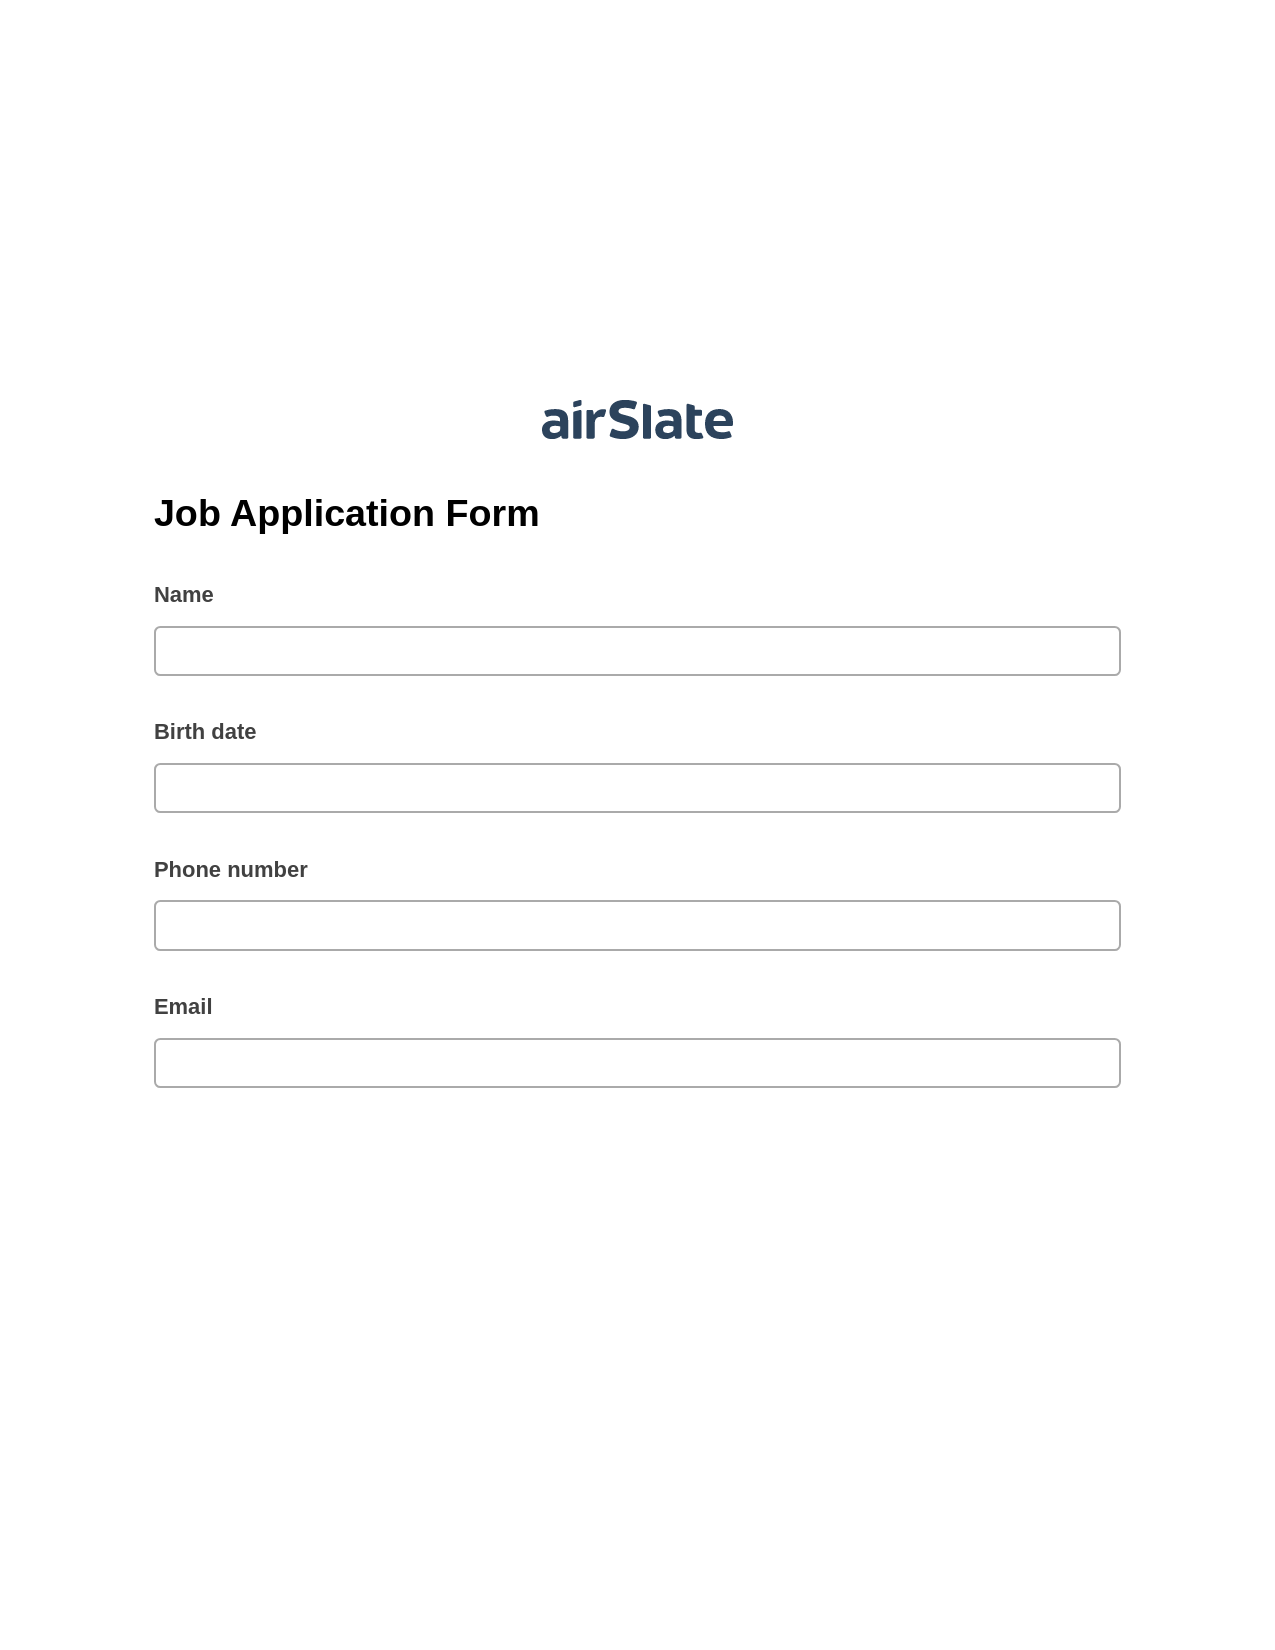 Multirole Job Application Form Pre-fill from MySQL Dropdown Options Bot, Update Salesforce Record Bot, Post-finish Document Bot